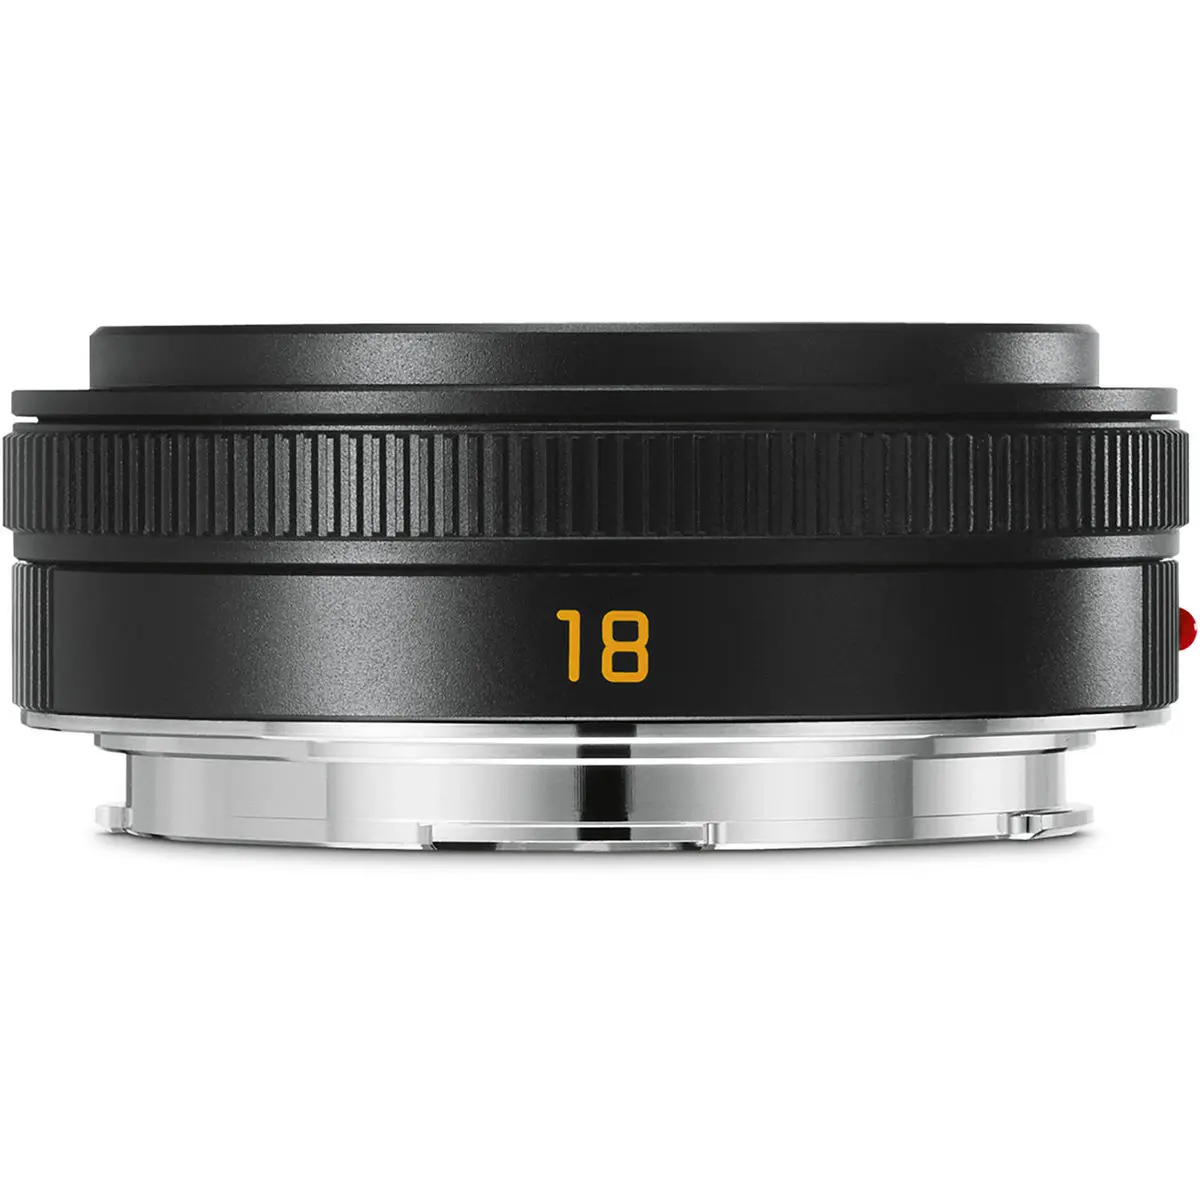 Main Image Leica Elmarit-TL 18 mm f/2.8 ASPH Black (11088) Lens